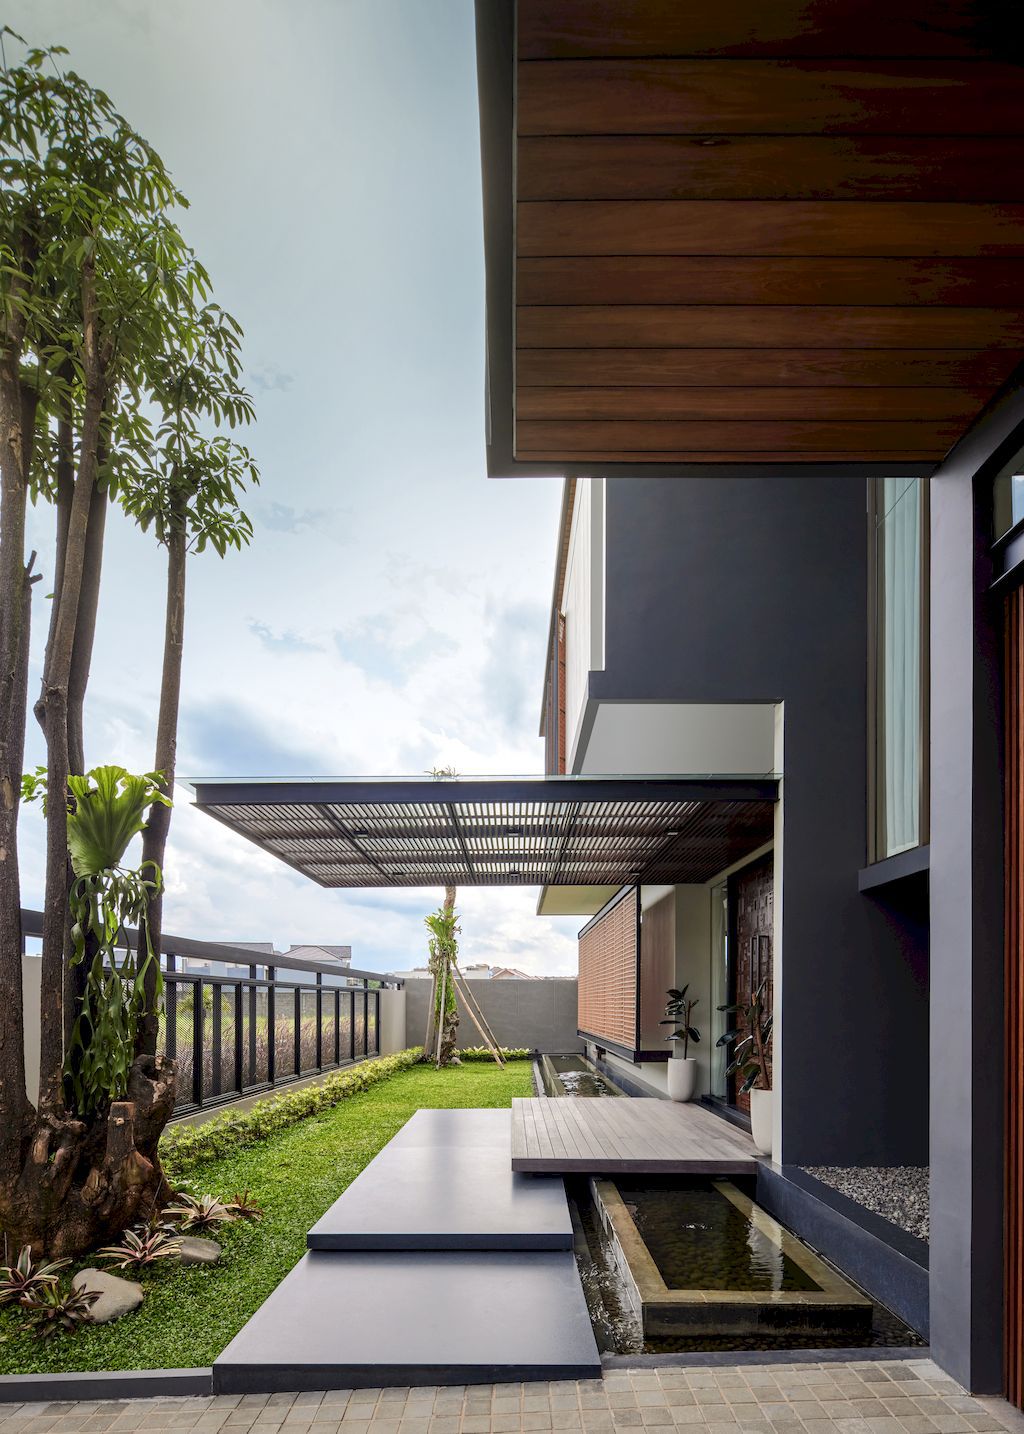 DJ House with Tropical Style, Modern Architecture Design by Rakta Studio